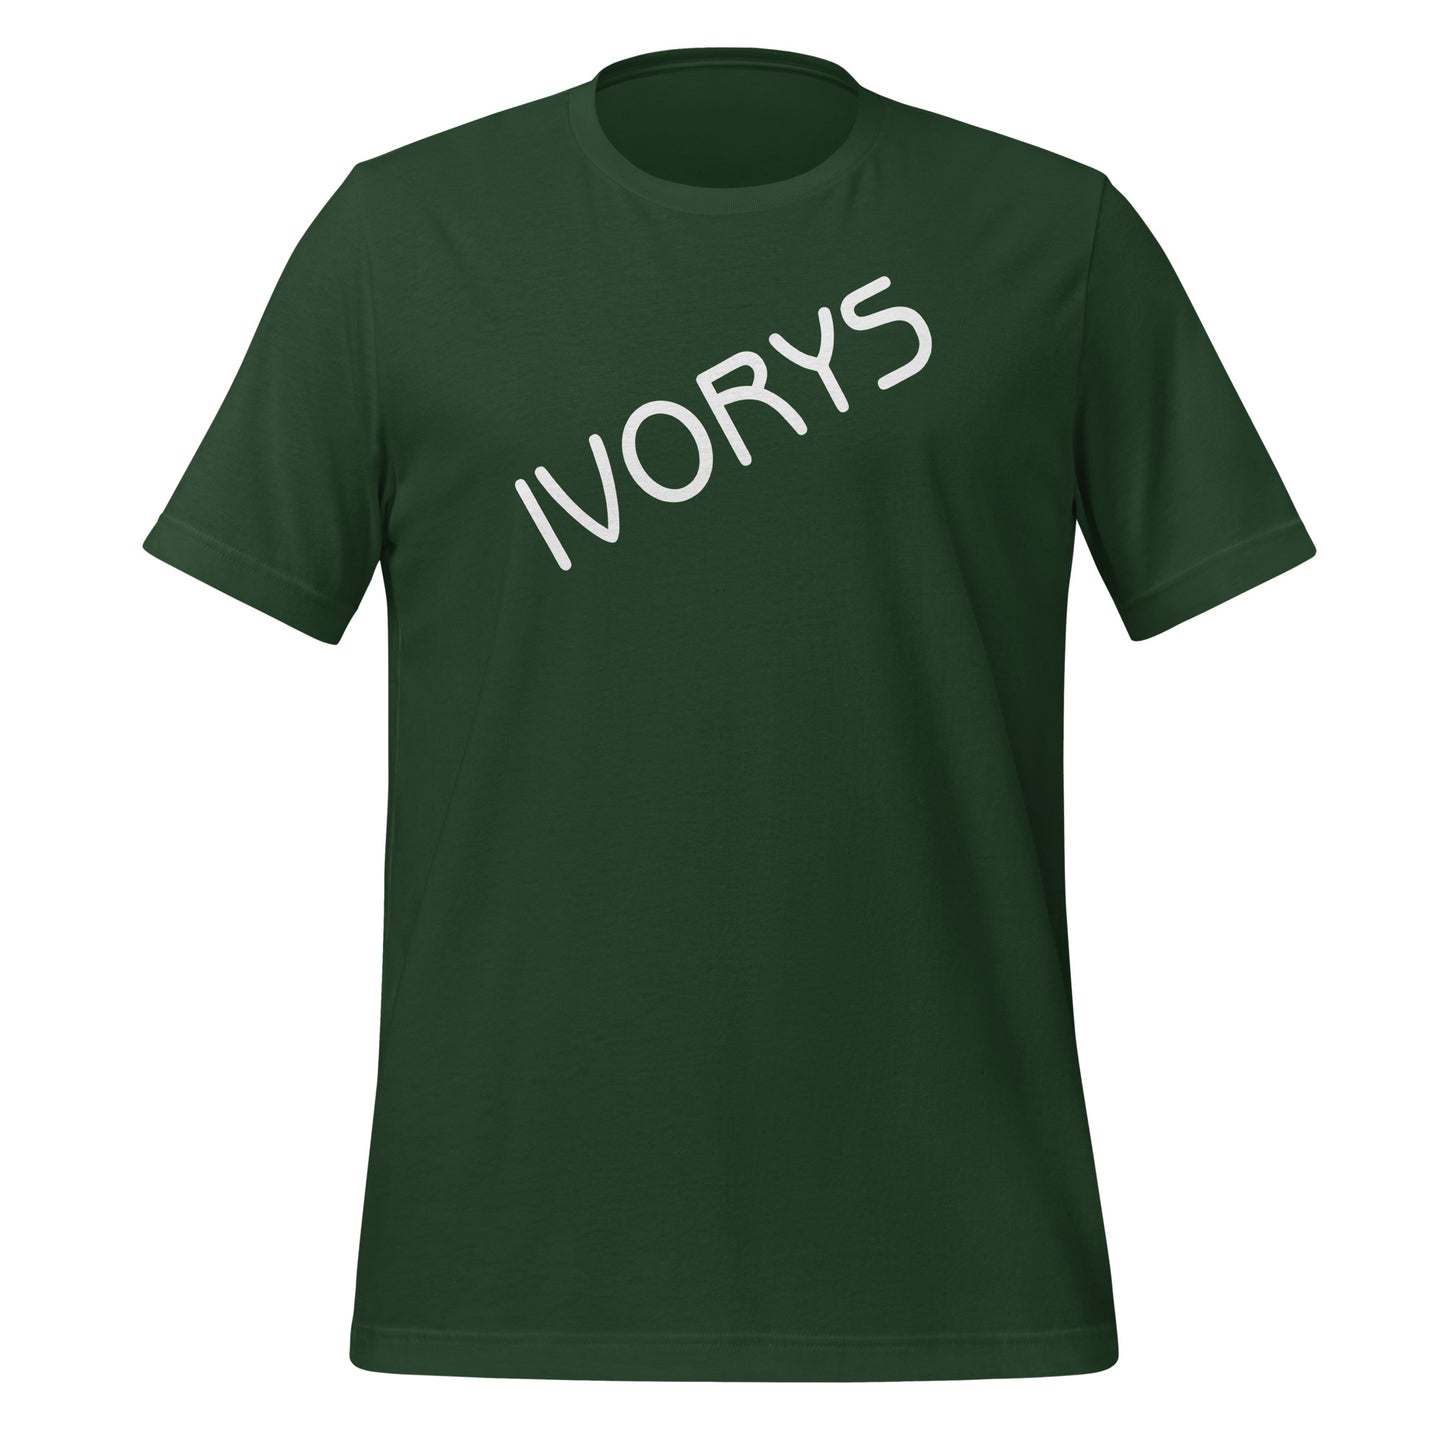 Ivory's unisex printed t-shirt